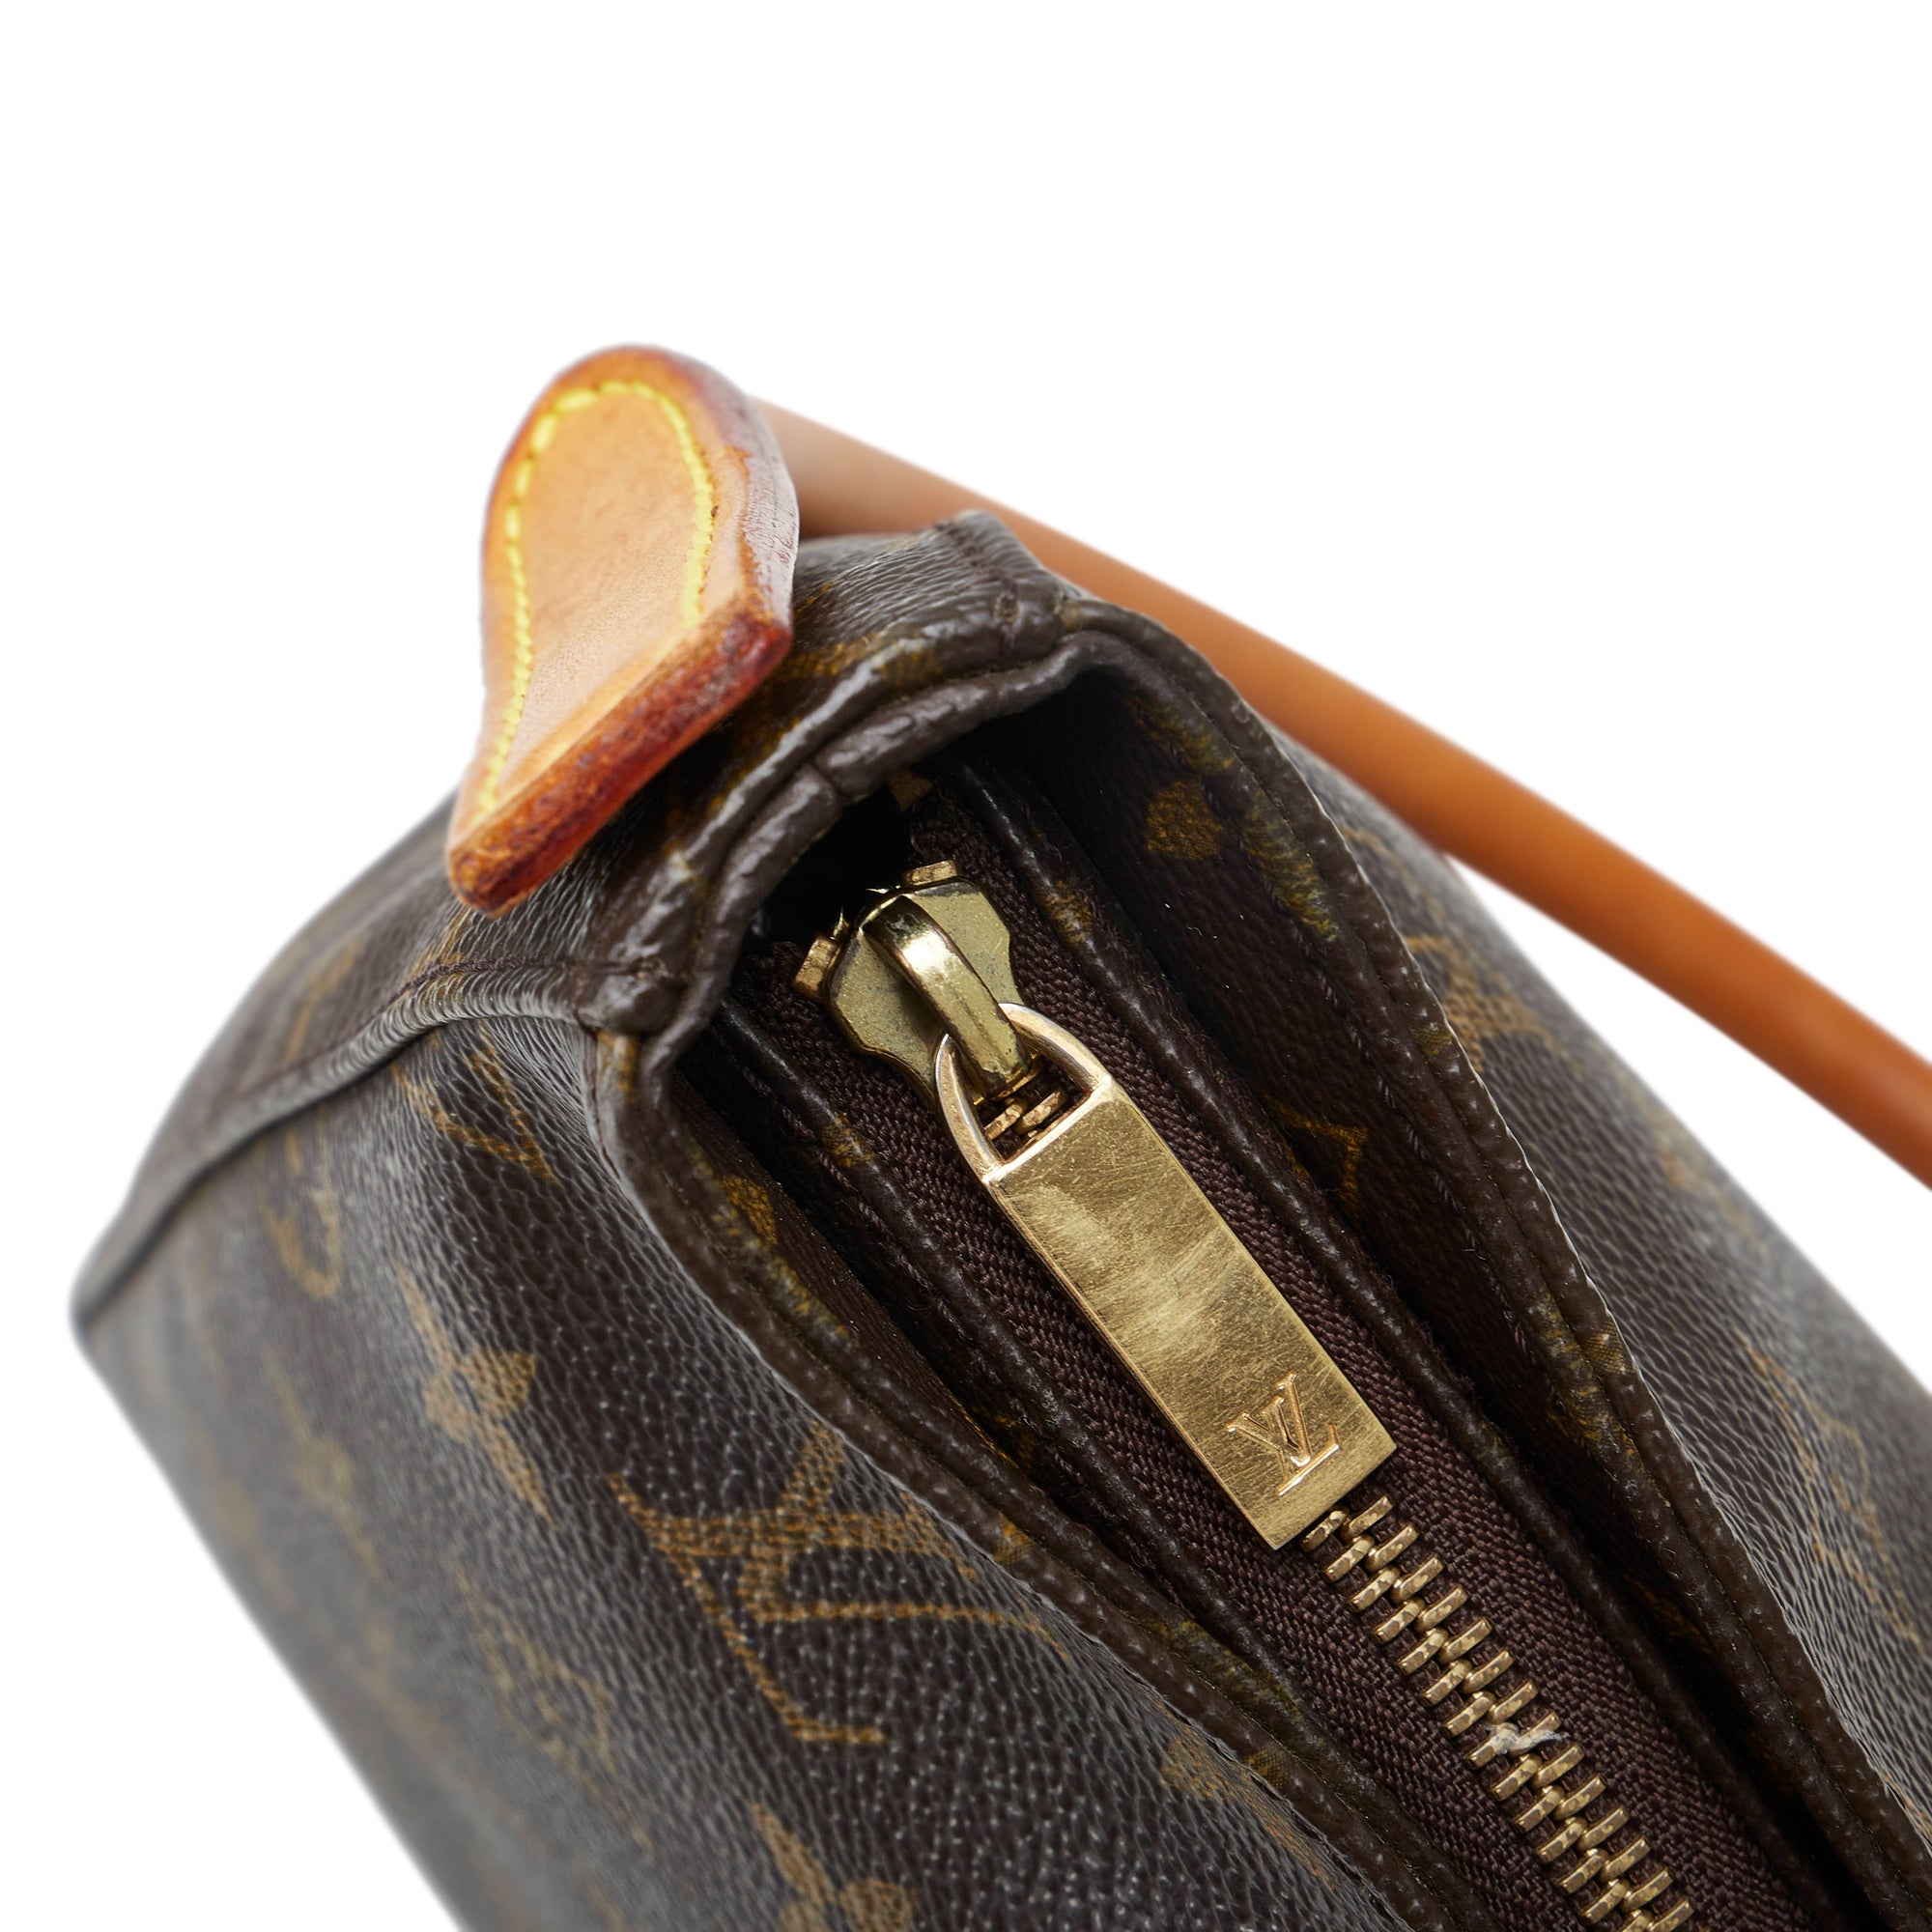 Vintage Louis Vuitton Mini Looping - Get Your Designer Bag